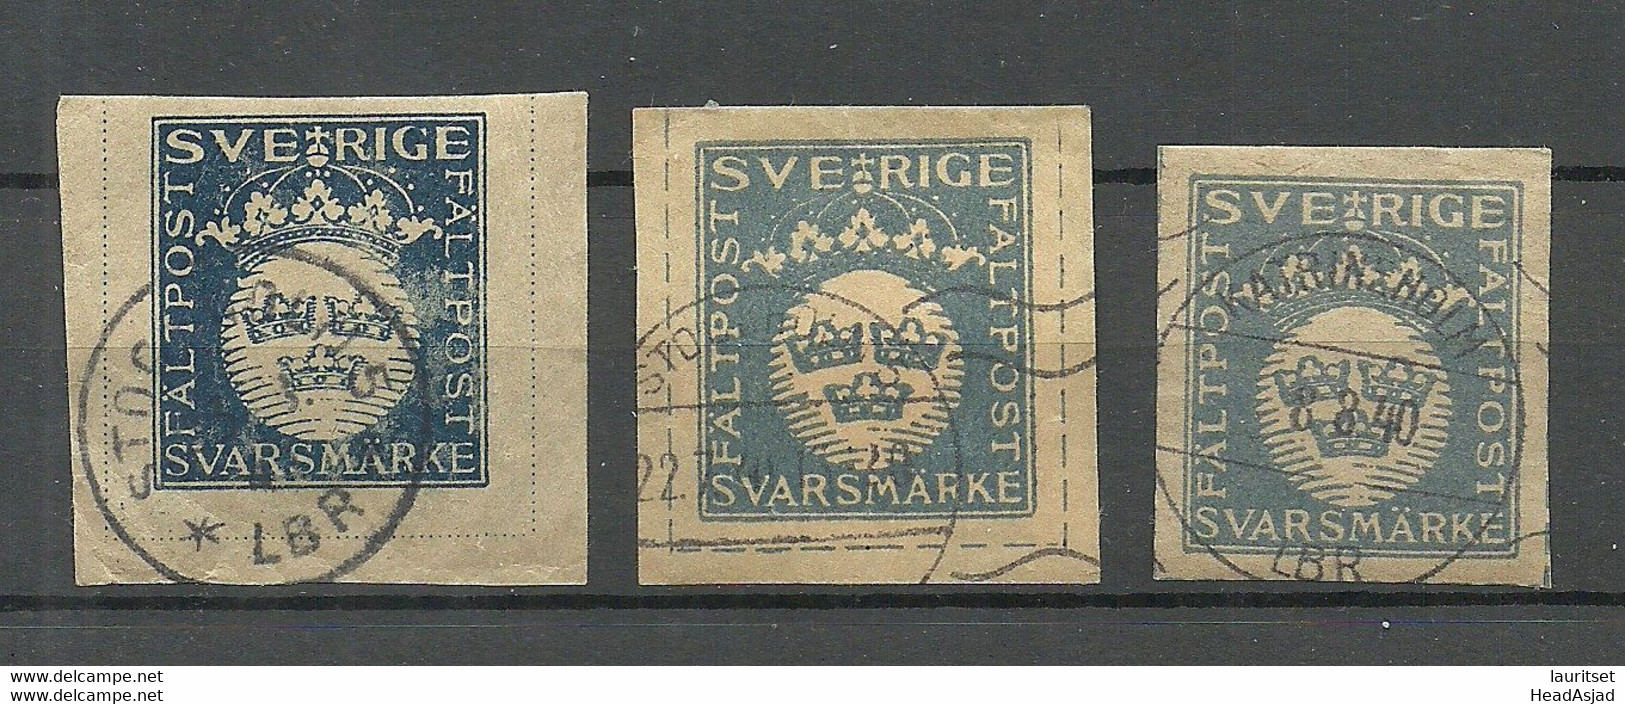 Sweden Schweden 1930-1942 Feldpost Field Post Fältpost O Militärpostmarken - Military